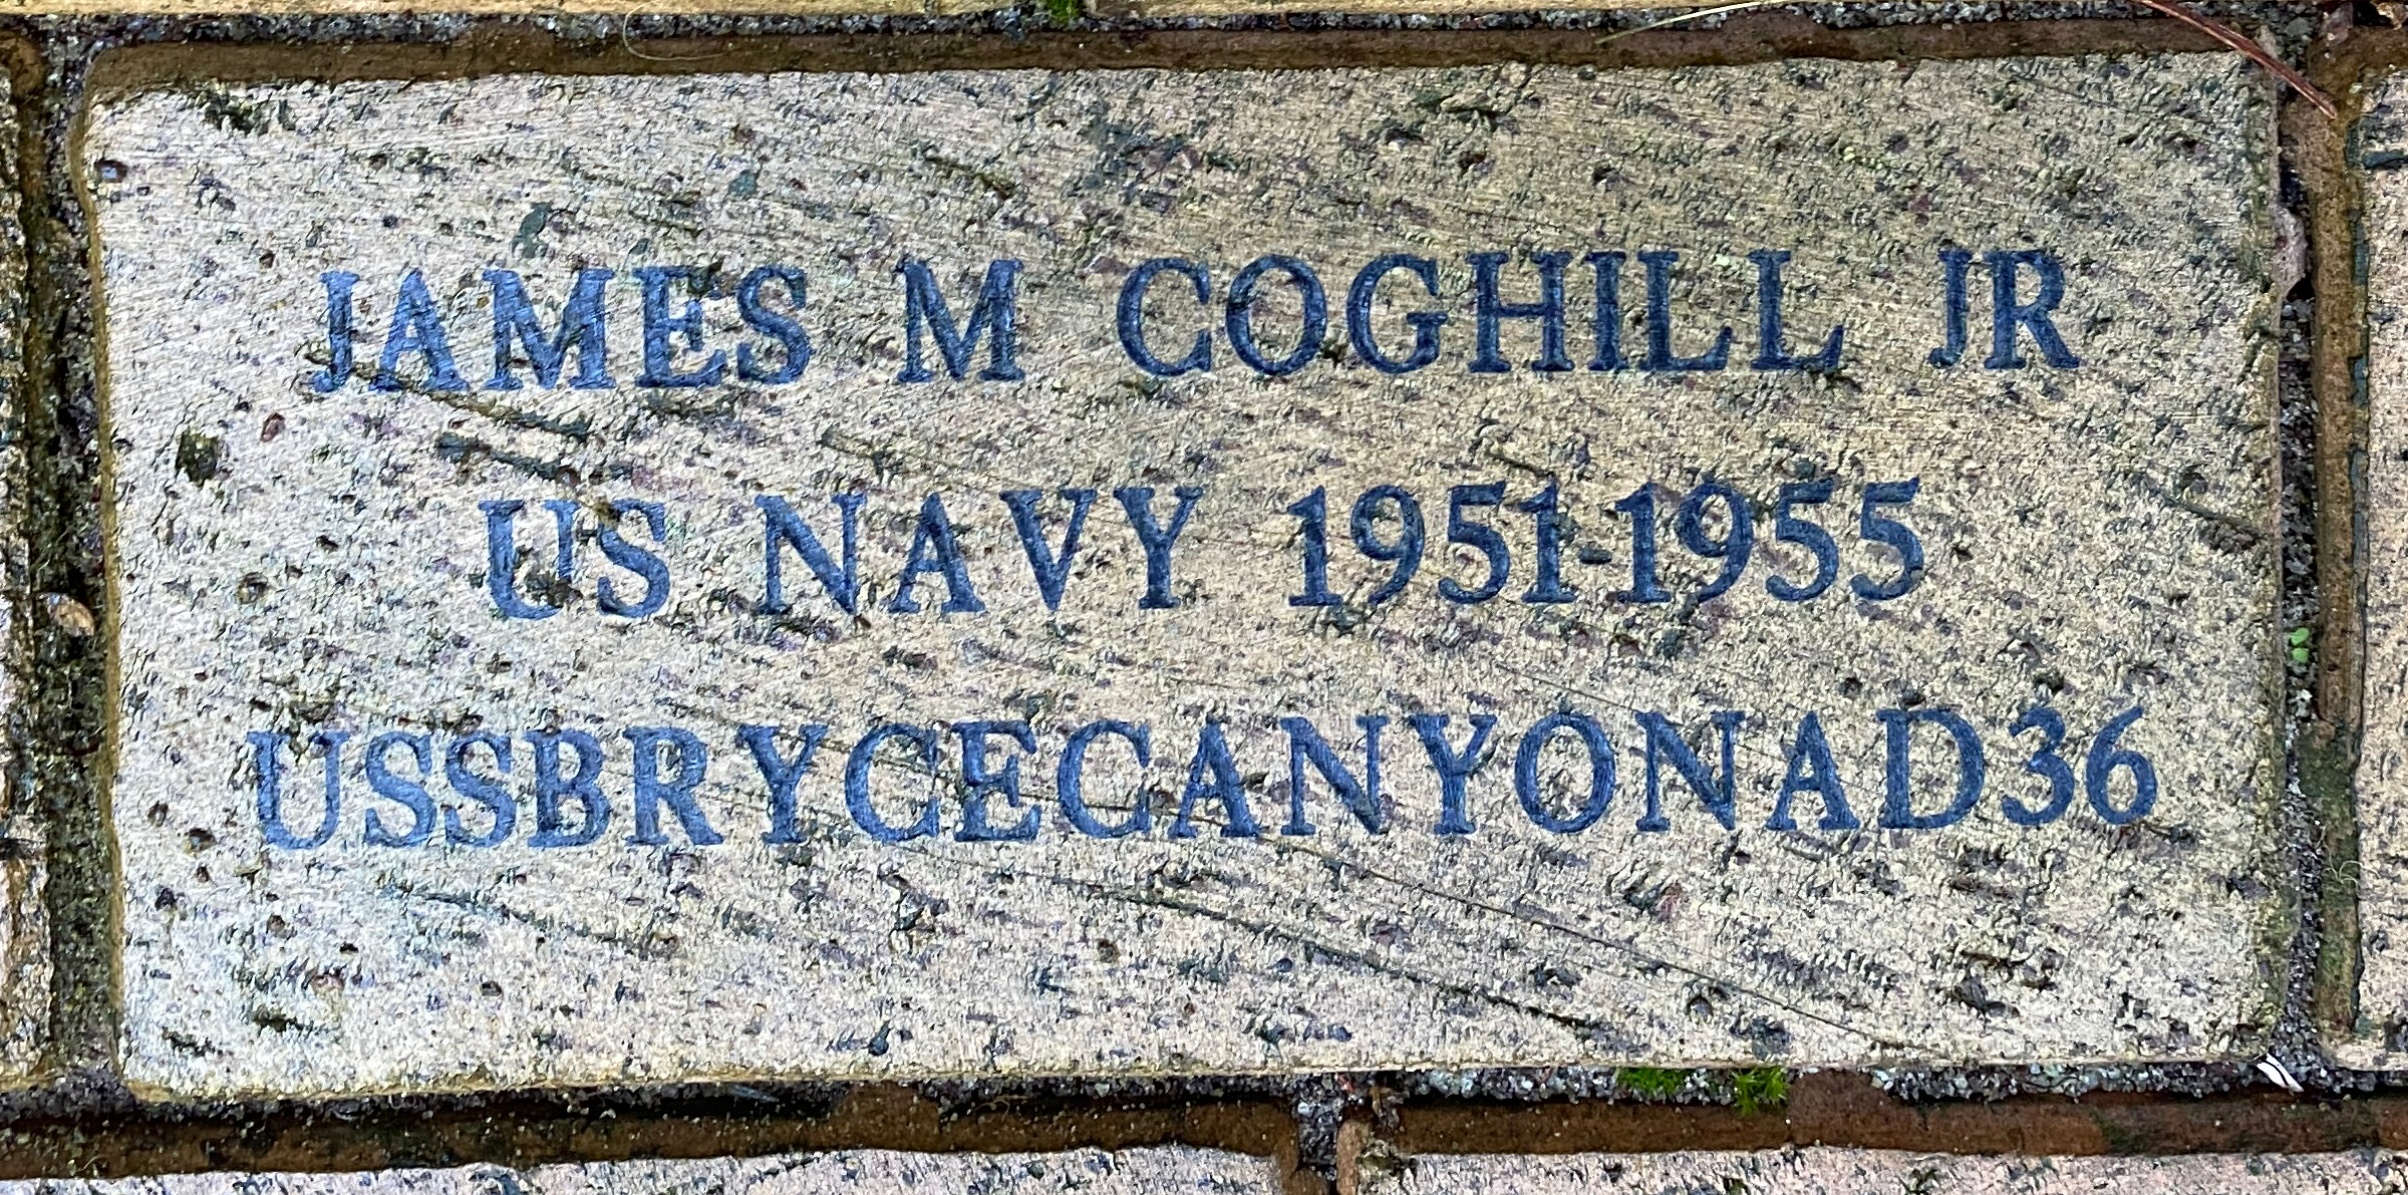 JAMES M COGHILL JR US NAVY 1951-1955 USSBRYCECANYONAD36